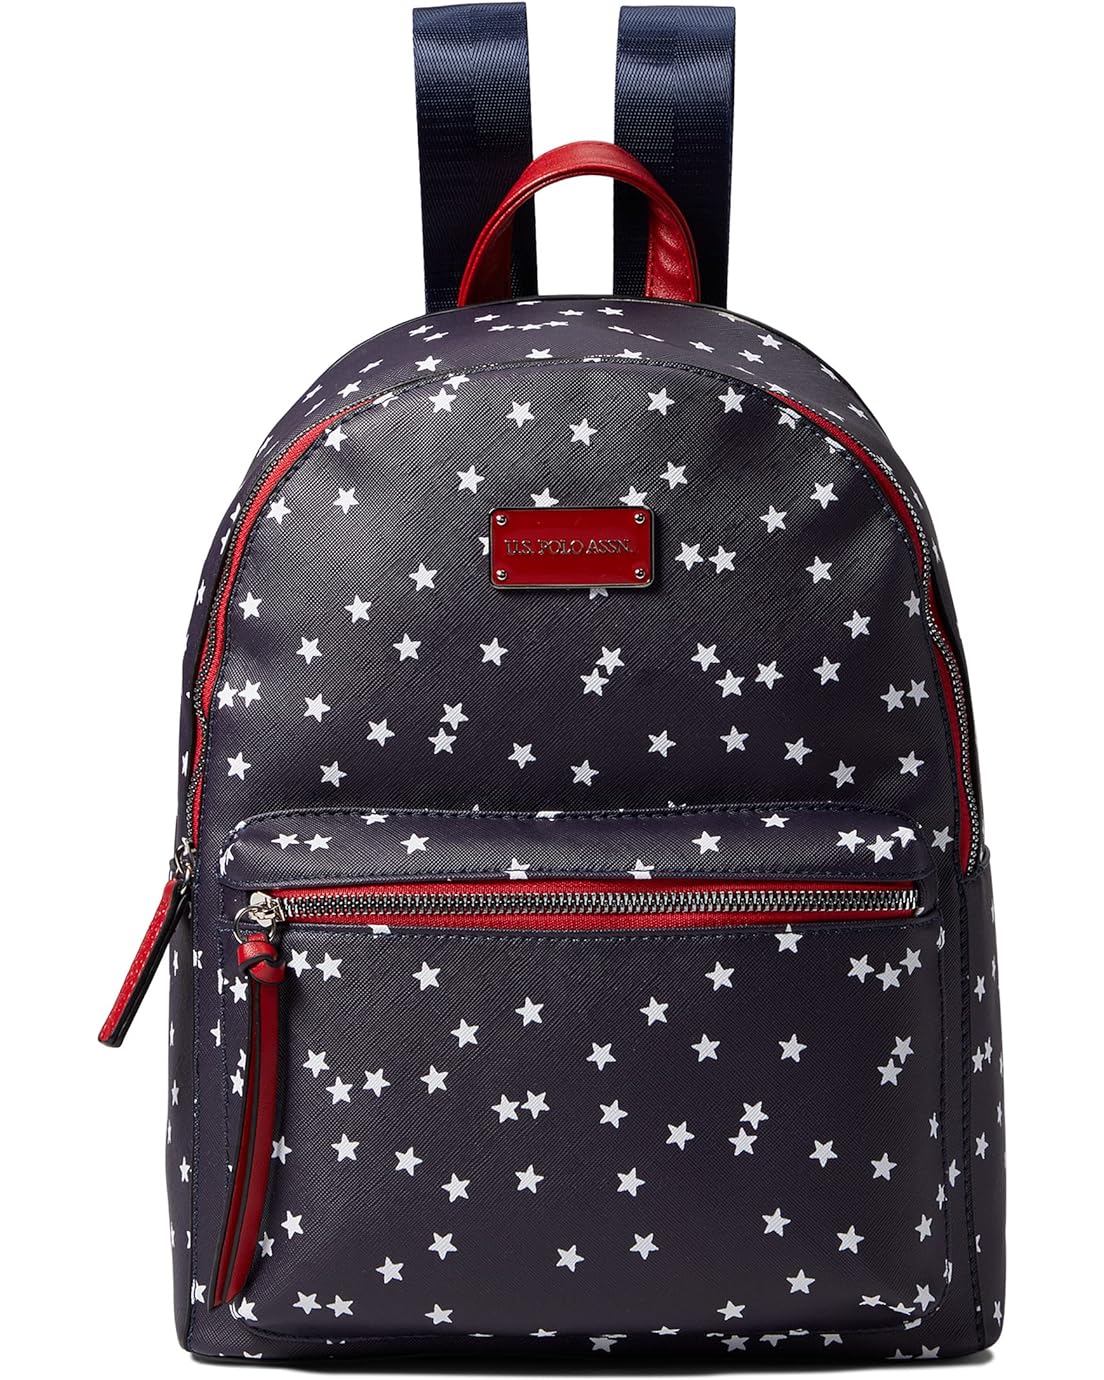  U.S. POLO ASSN. Star Backpack